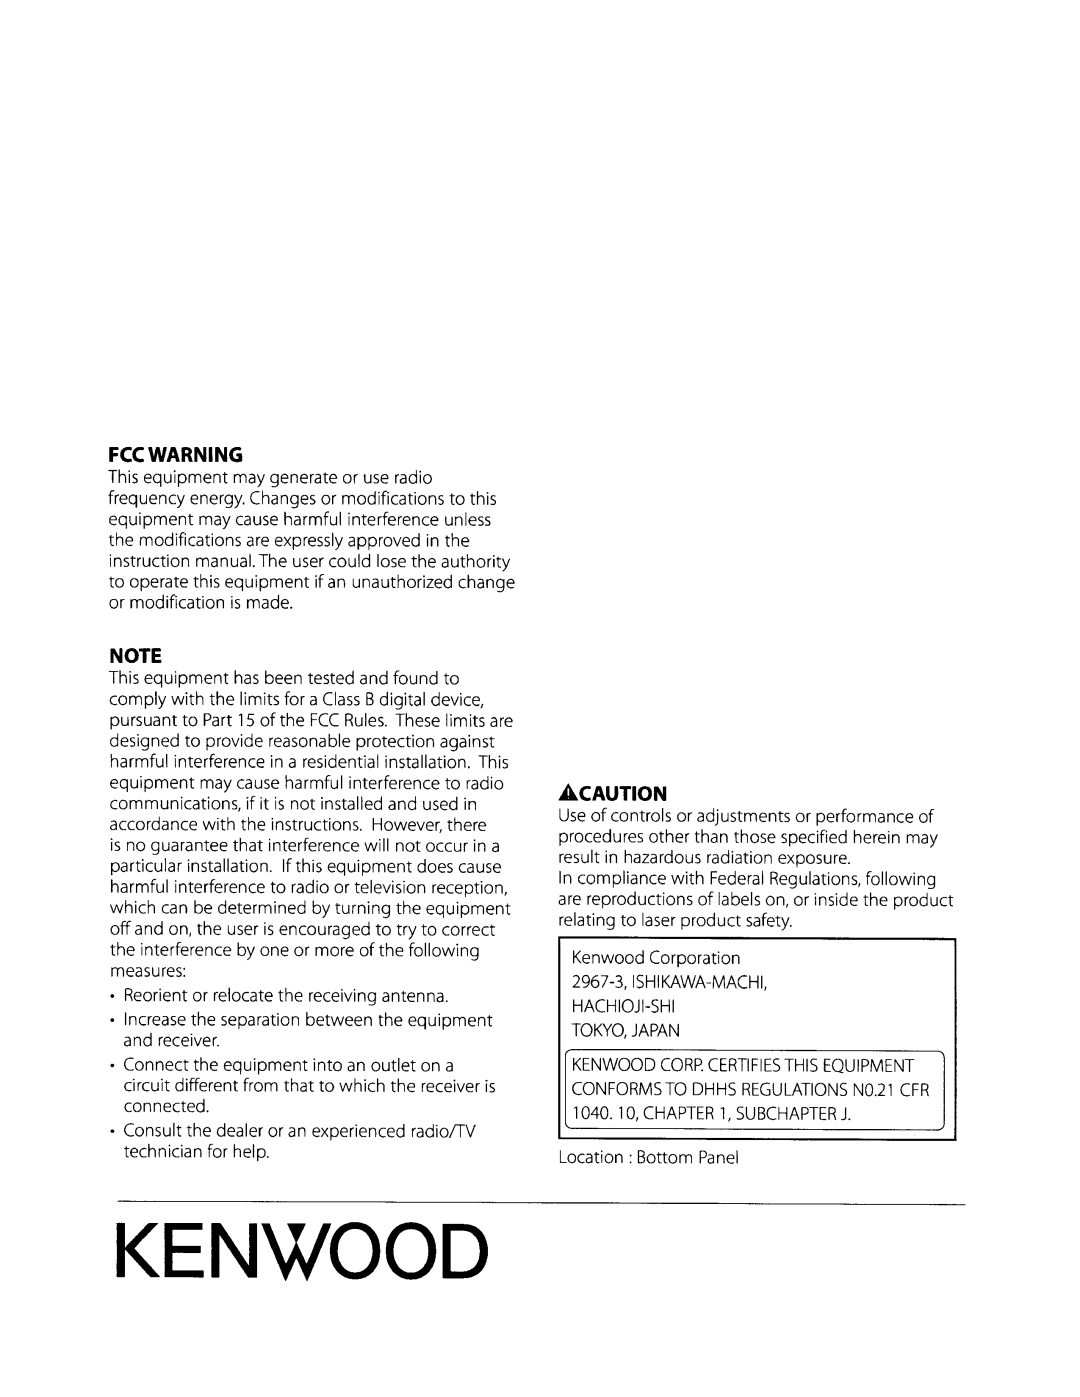 Kenwood KDC-MP338, KDC-MP438U, KDC-MP408U instruction manual Kenwood, Fcc Warning, Acaution 